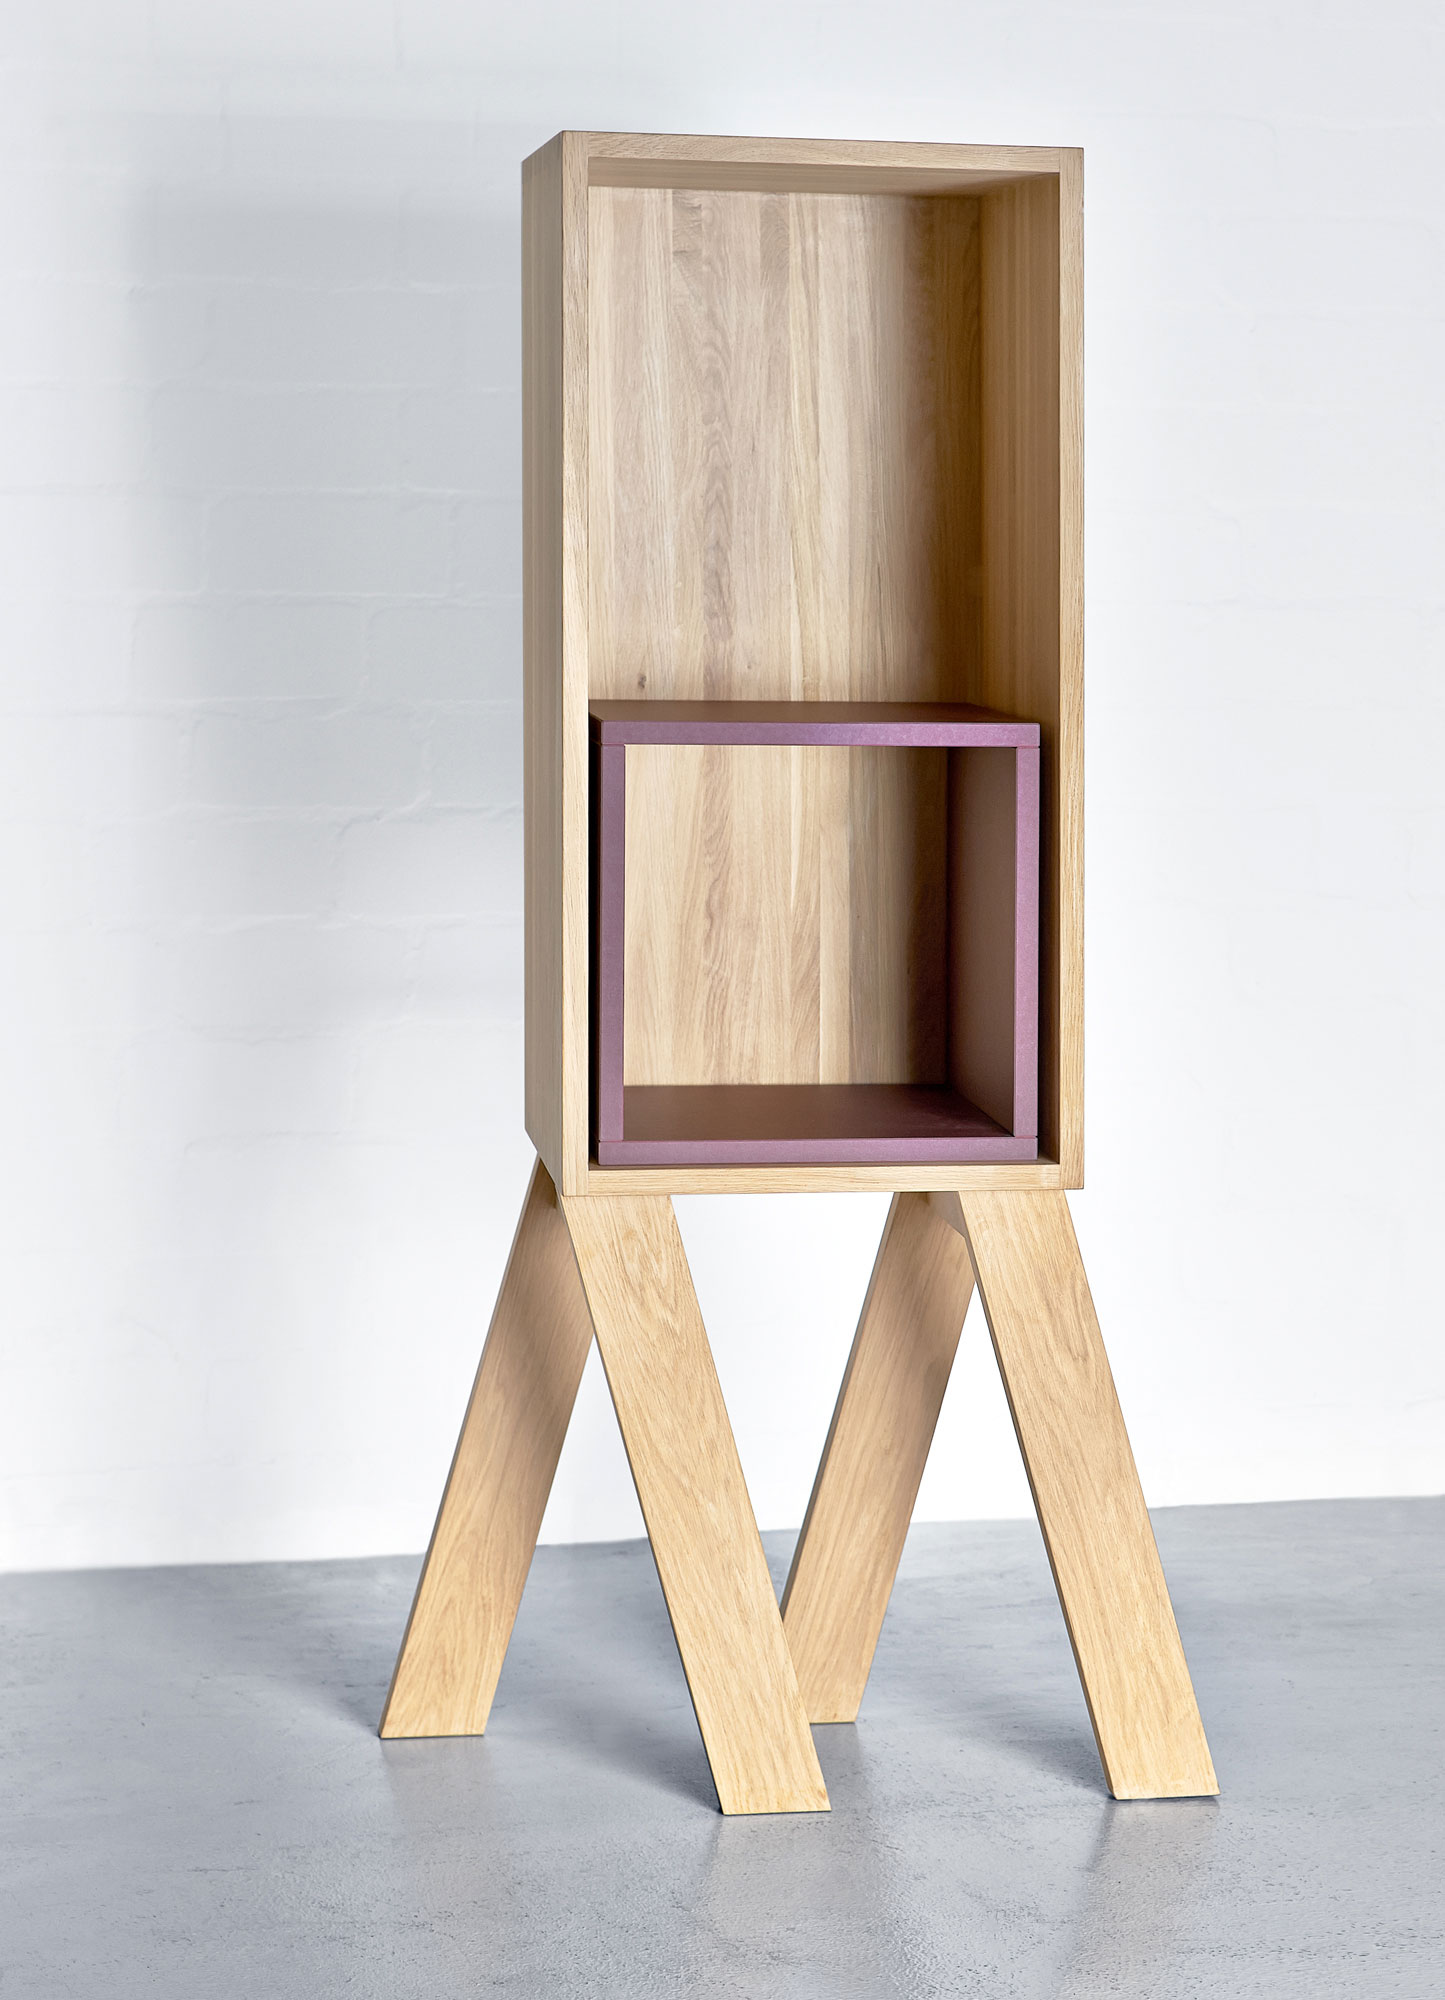 Solid Wood Shelf GO RW 0091a custom made in solid wood by vitamin design